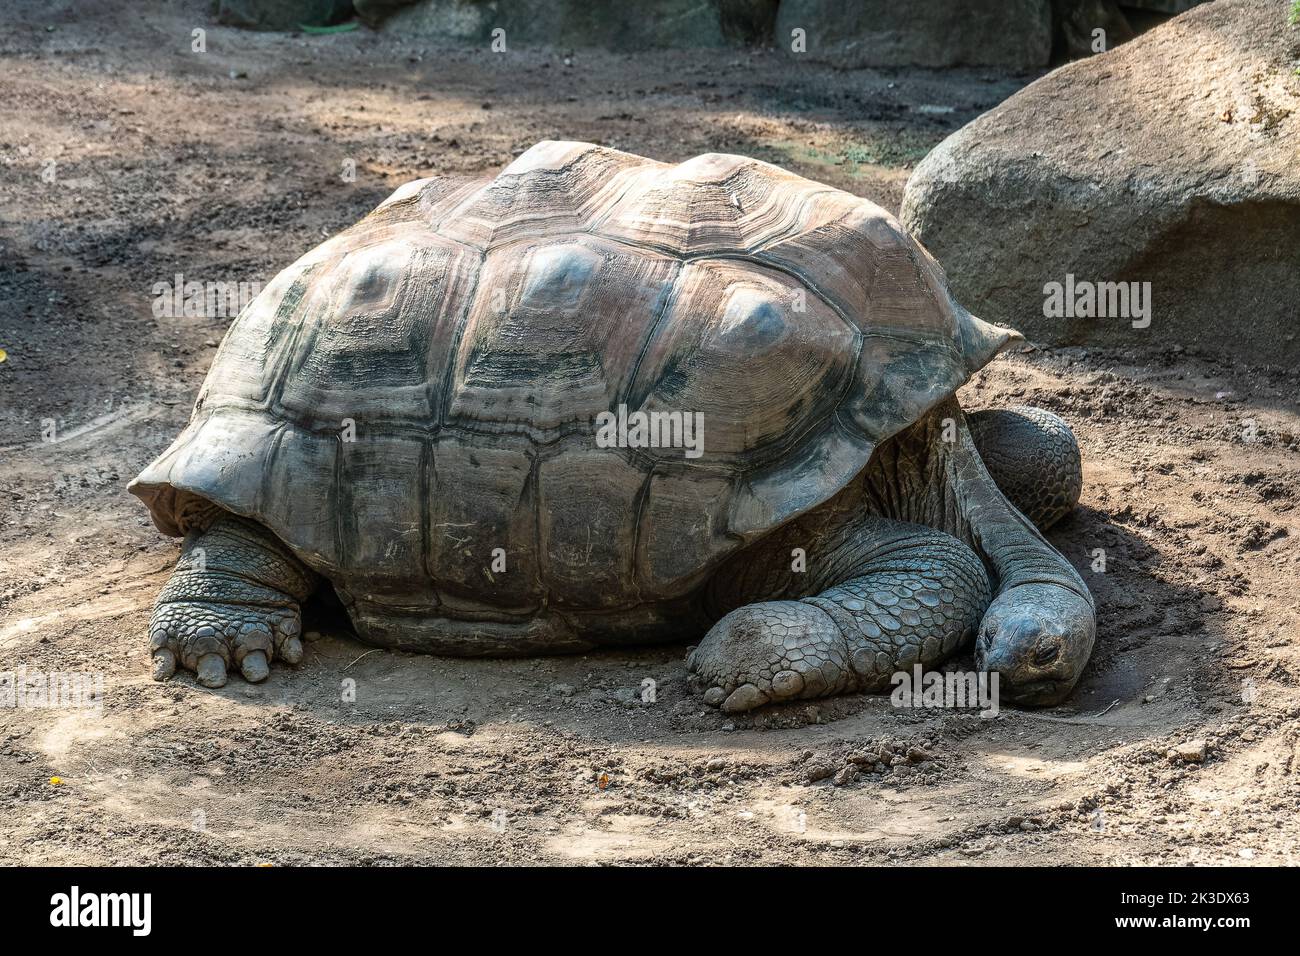 Aldabra giant tortoise, Curieuse Marine National Park, Curieuse Island, Seychelles Stock Photo